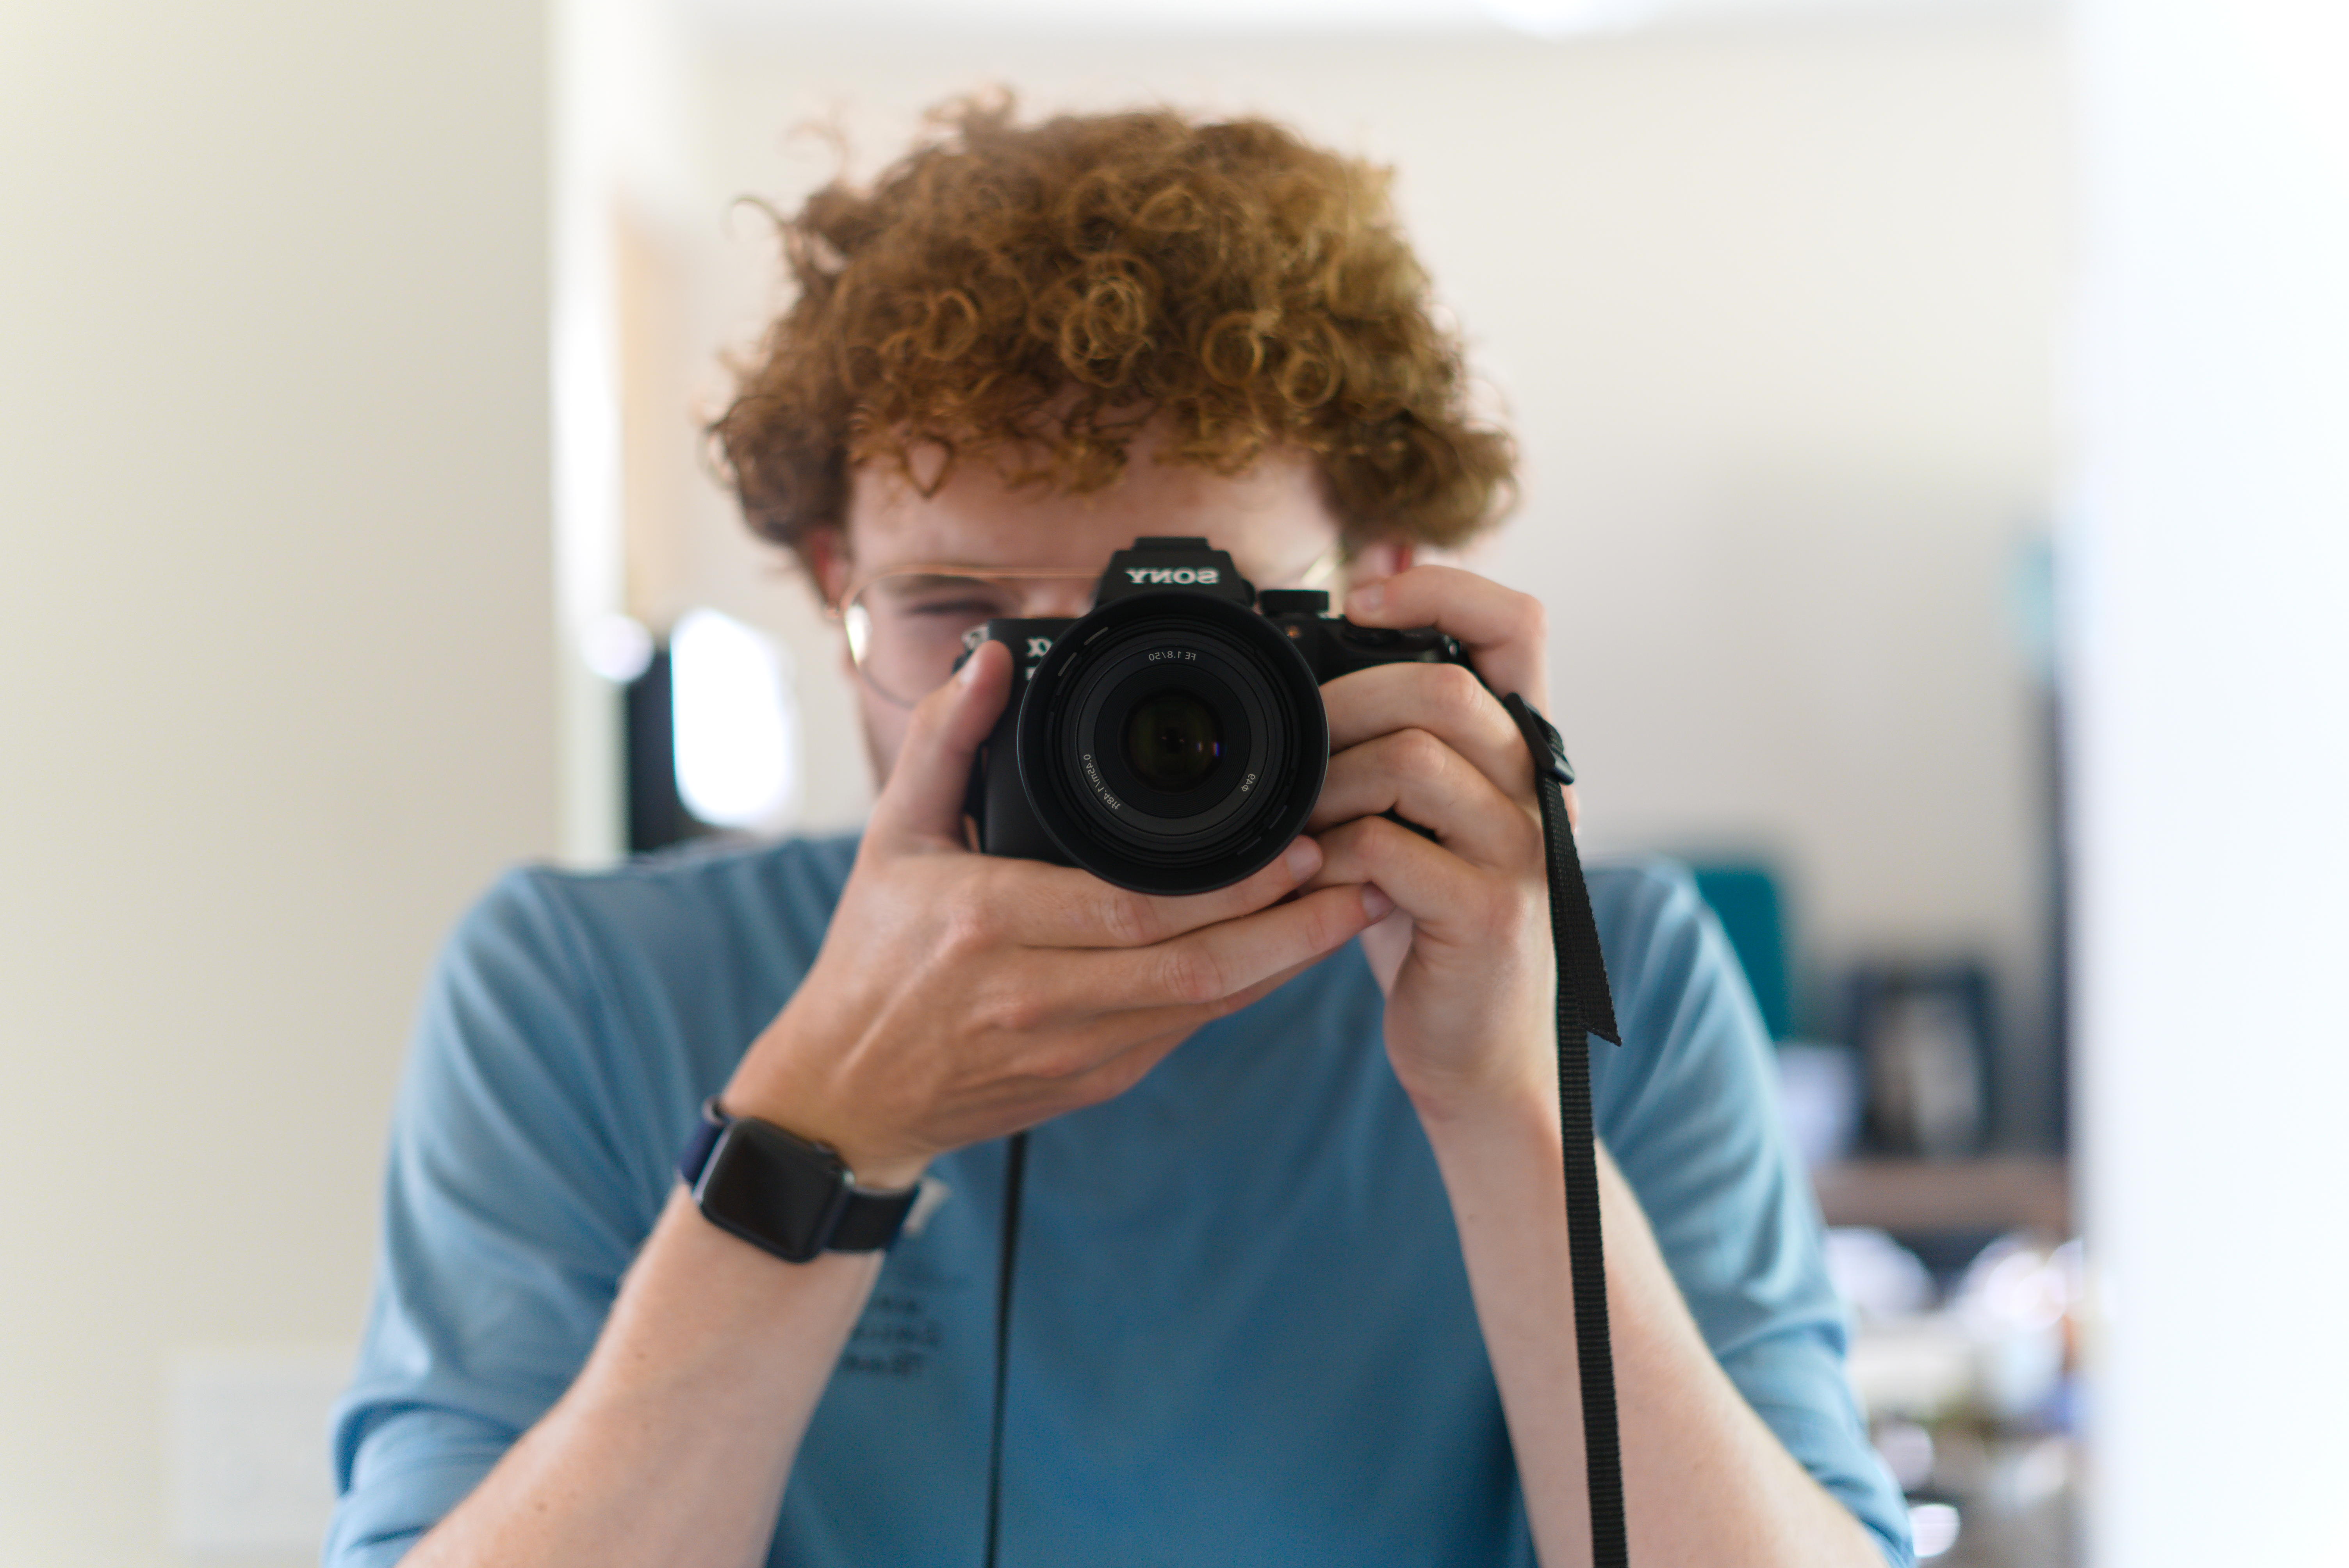 self portrait of me holding camera